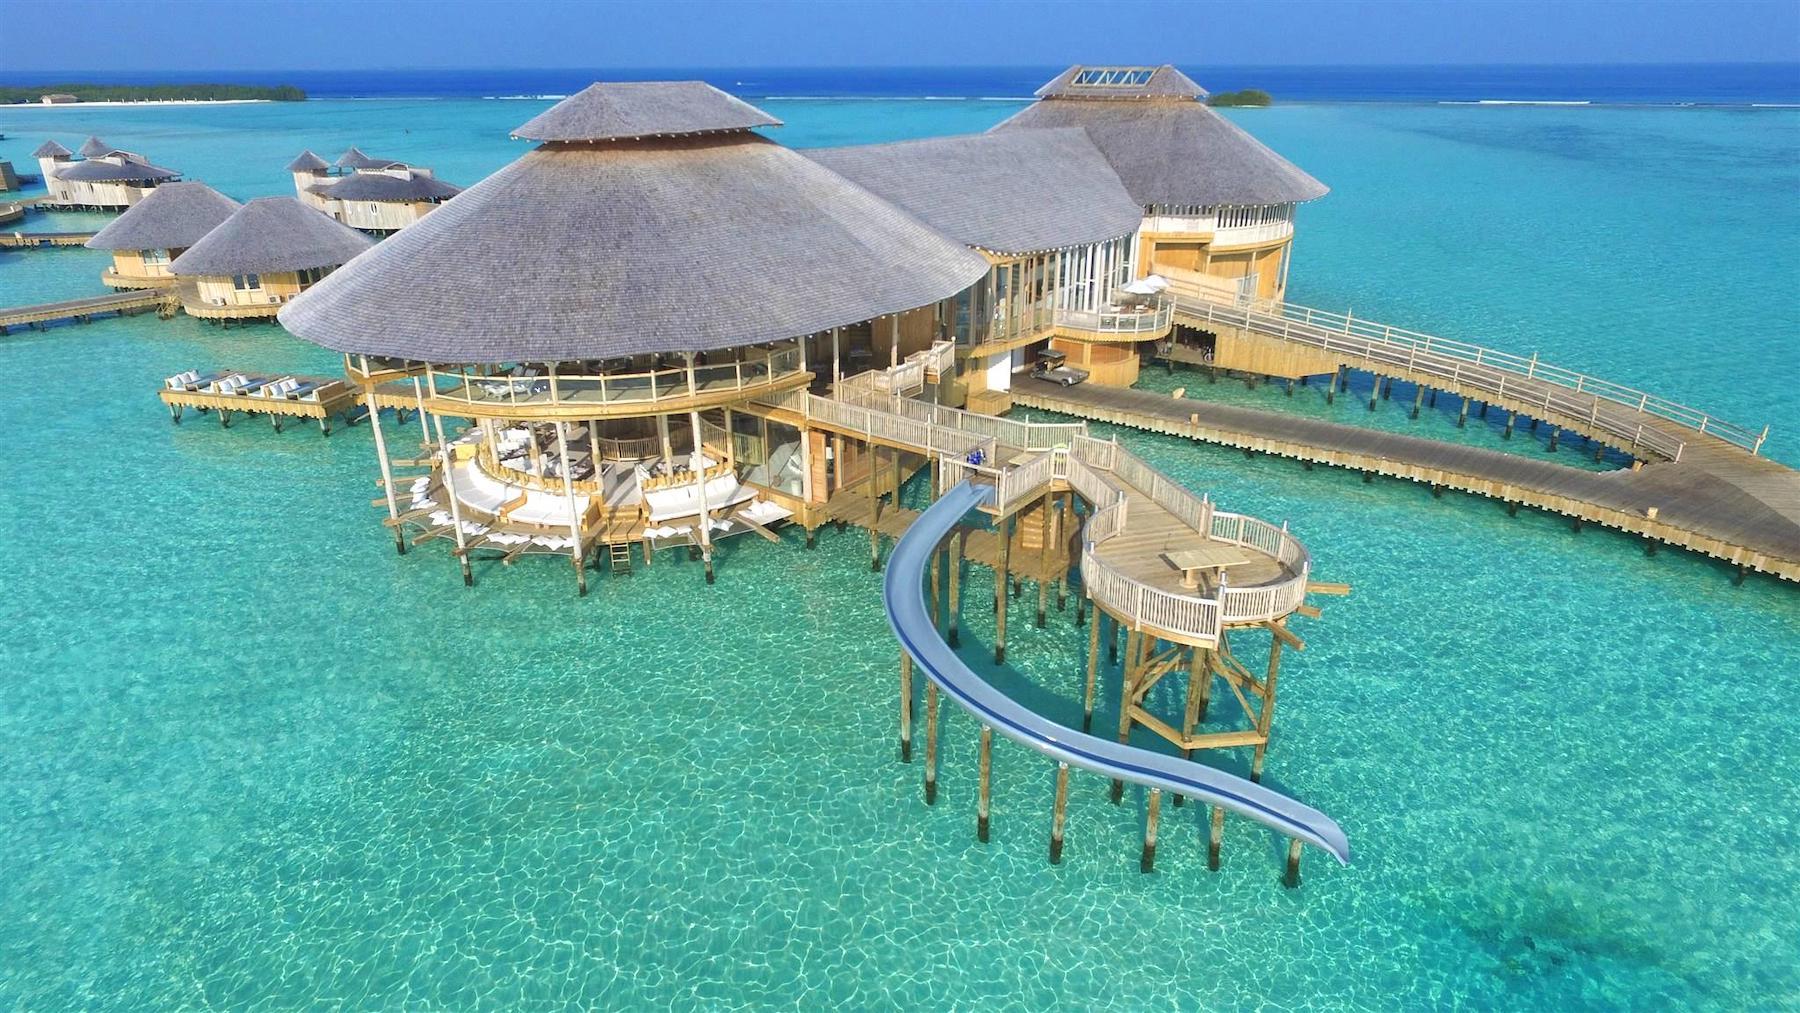 HJ Real Estate Guide: The Spectacular Villa 3 at Maldives' Soneva Jani